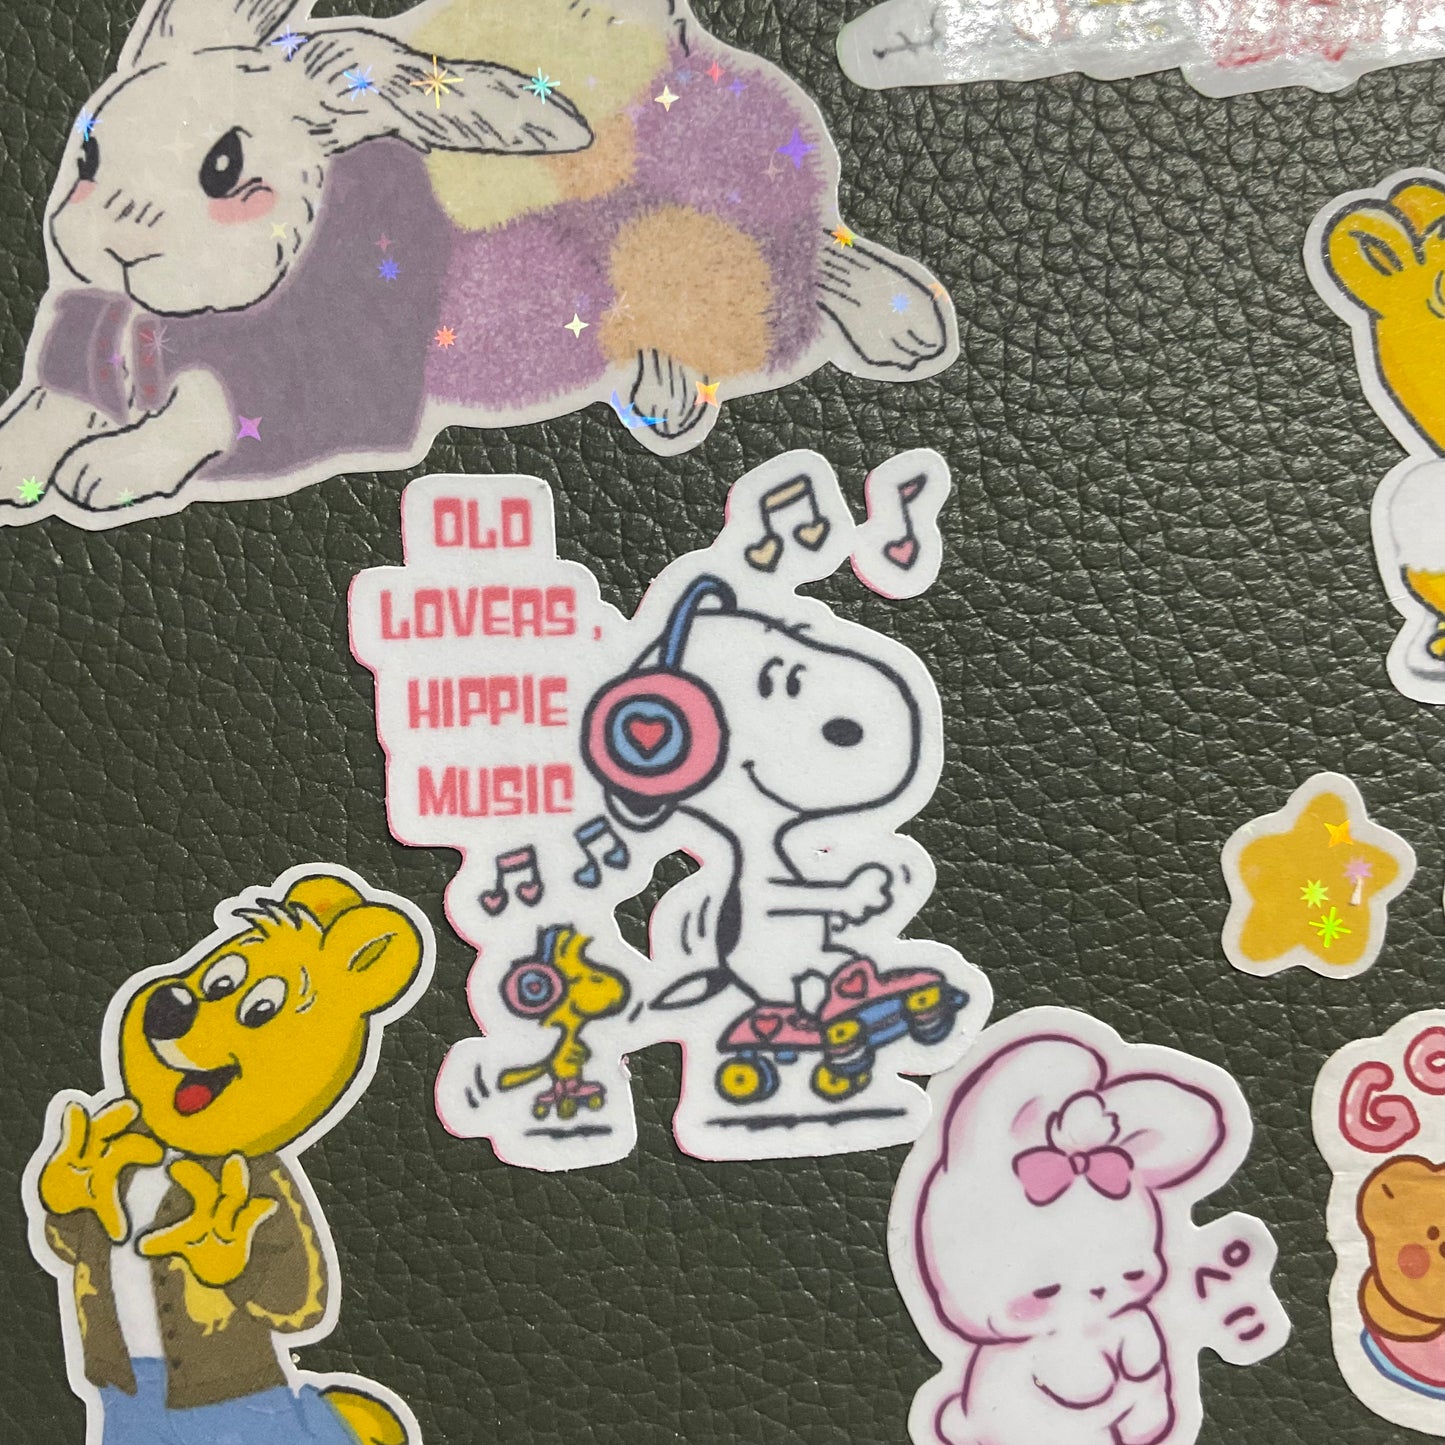 Snoopy Sticker Sheet Volume 3